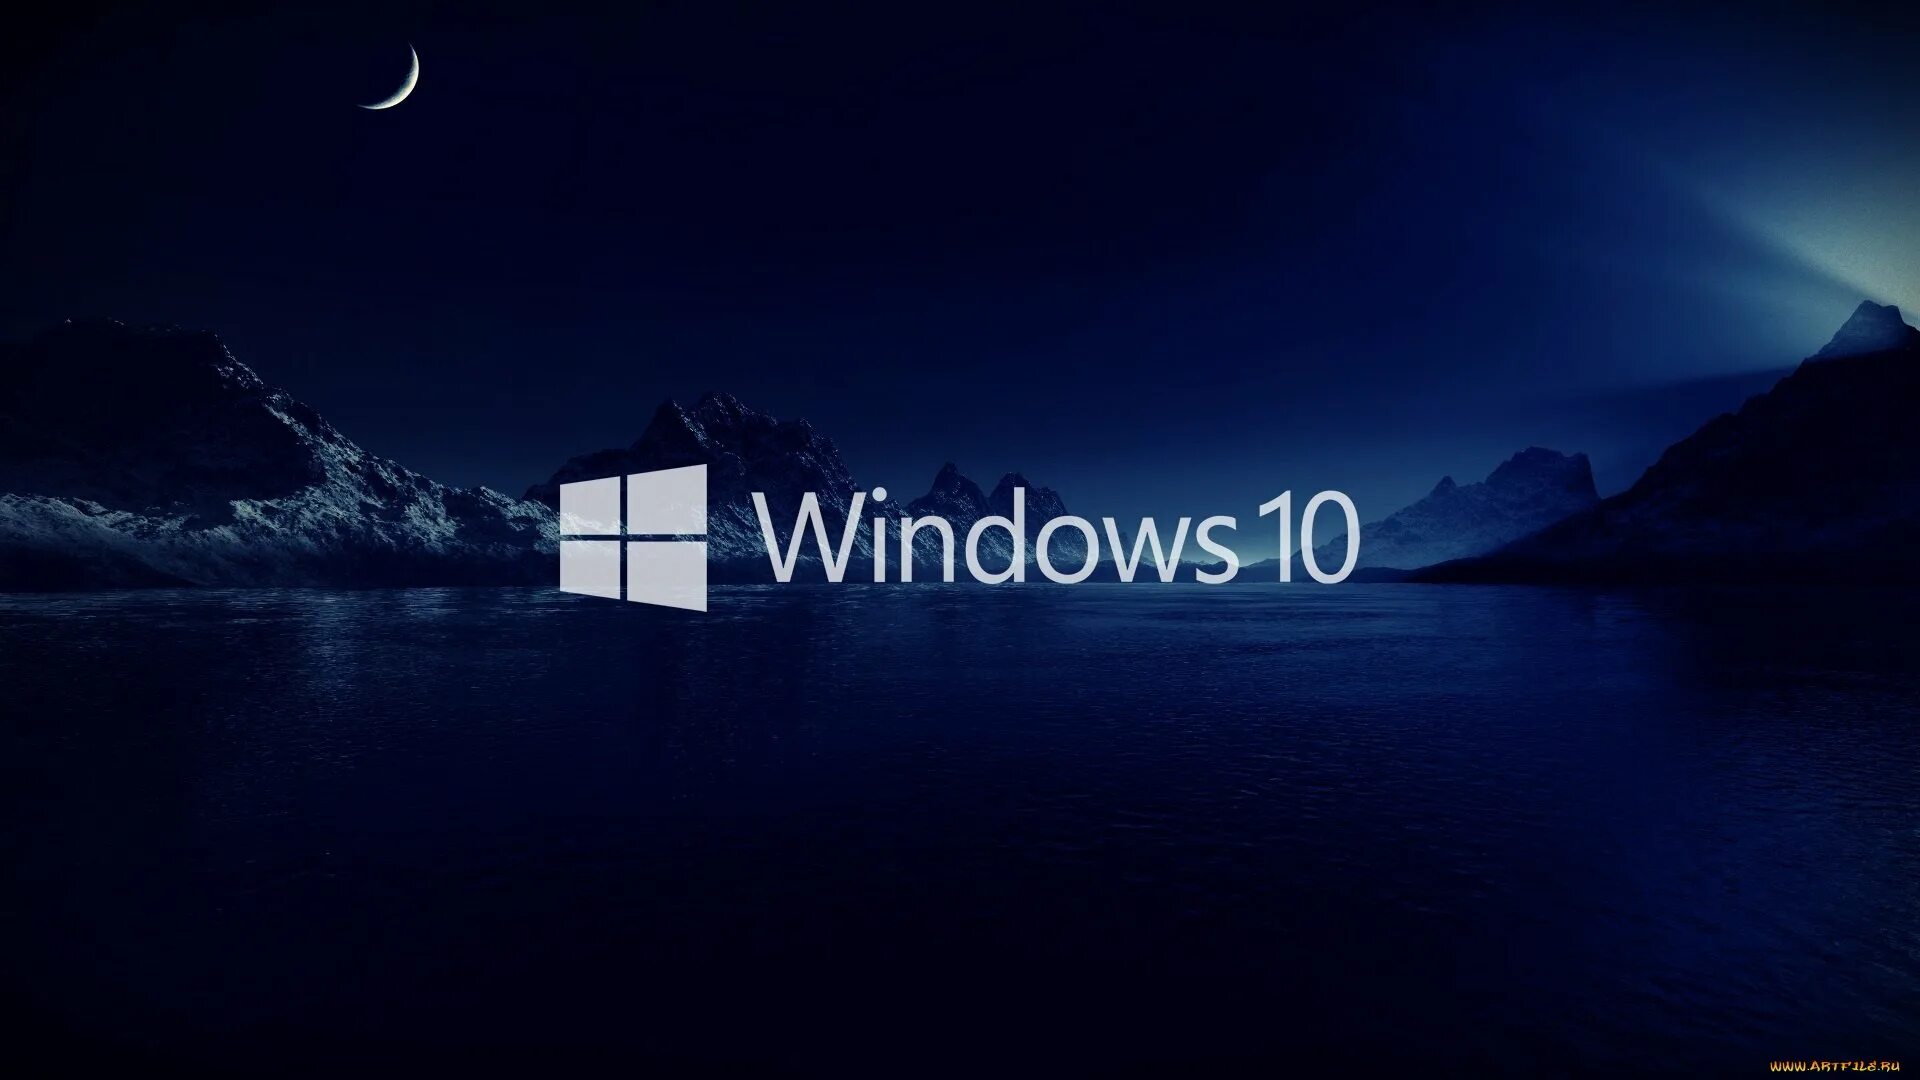 Windows 10 fan. Картинки Windows 10. Обои виндовс 10. Заставка Windows. Фоновое изображение Windows 10.